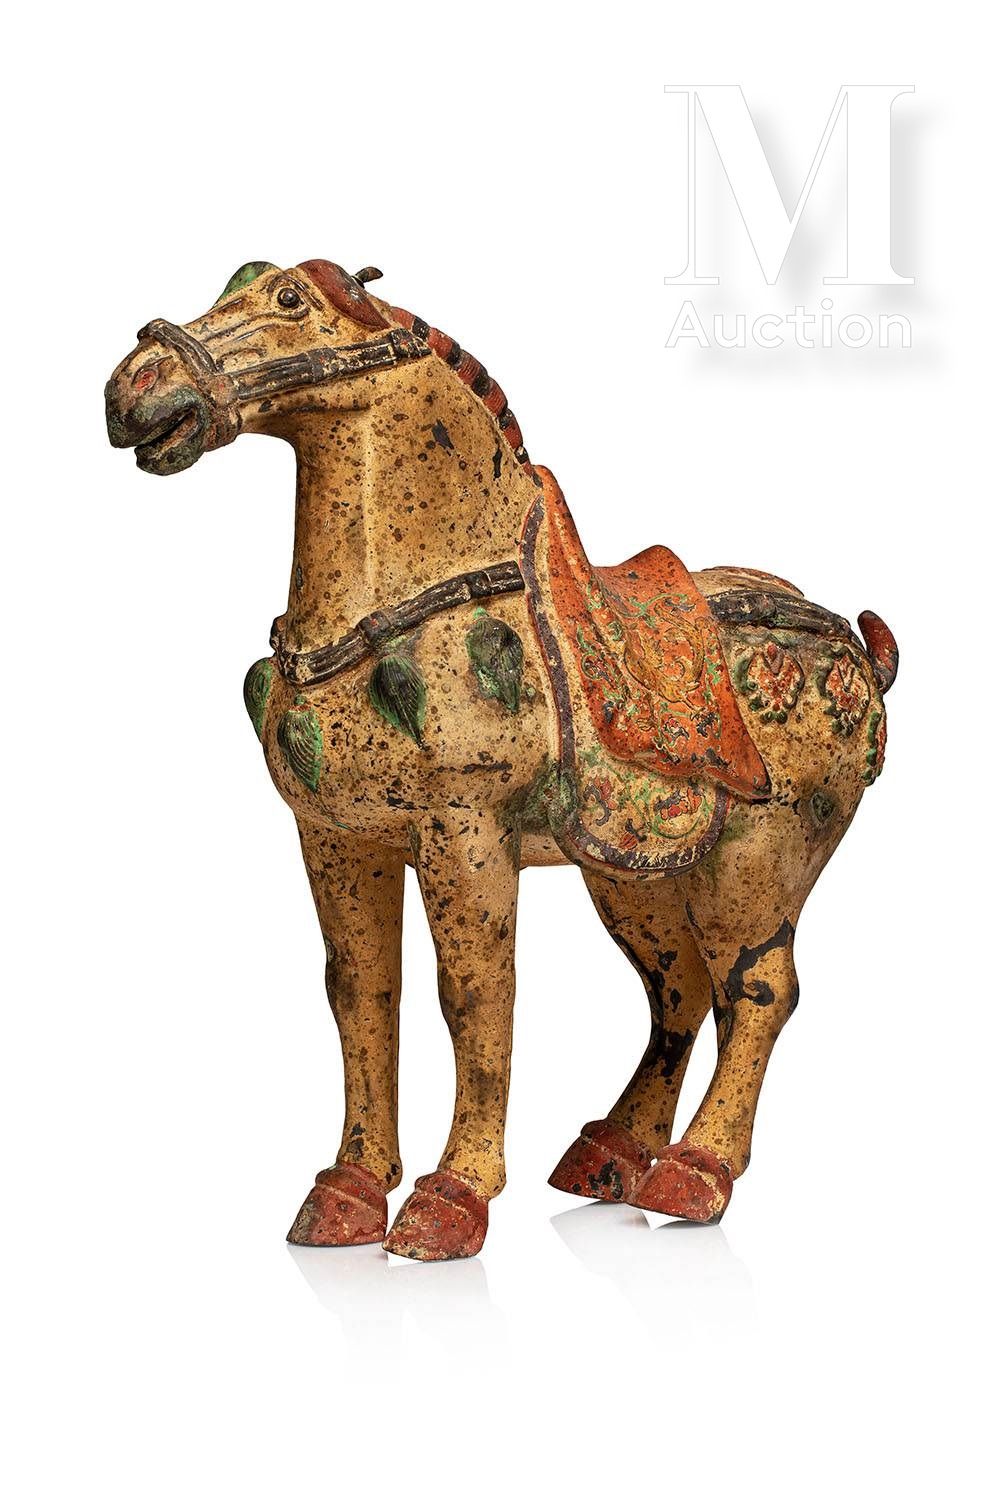 Chine, Epoque Tang 
罕见的多色漆银马雕像 该动物四条腿，优雅地装饰着丰富的马具，包括带有凤凰图案的马鞍，马套，胸甲和带有装饰品的臀部。鬃毛是&hellip;